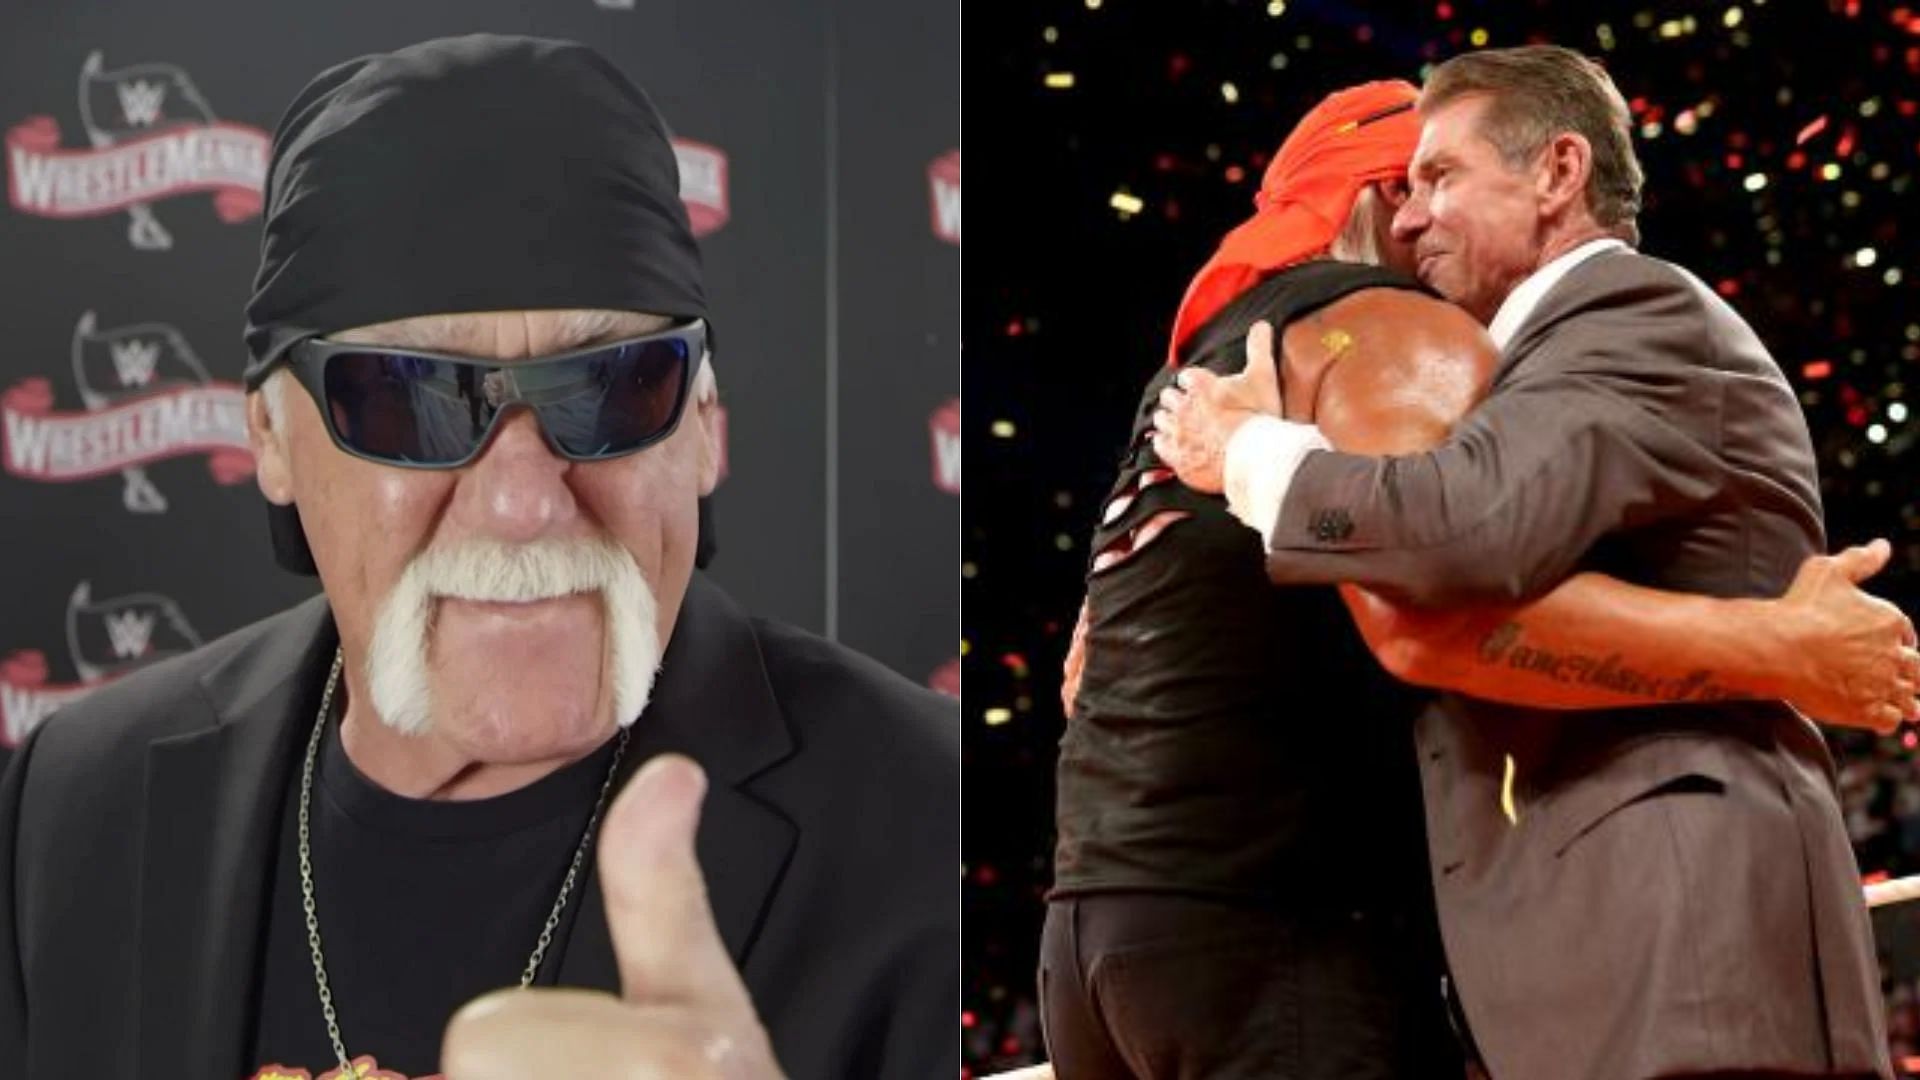 Hulk Hogan was Vince McMahon